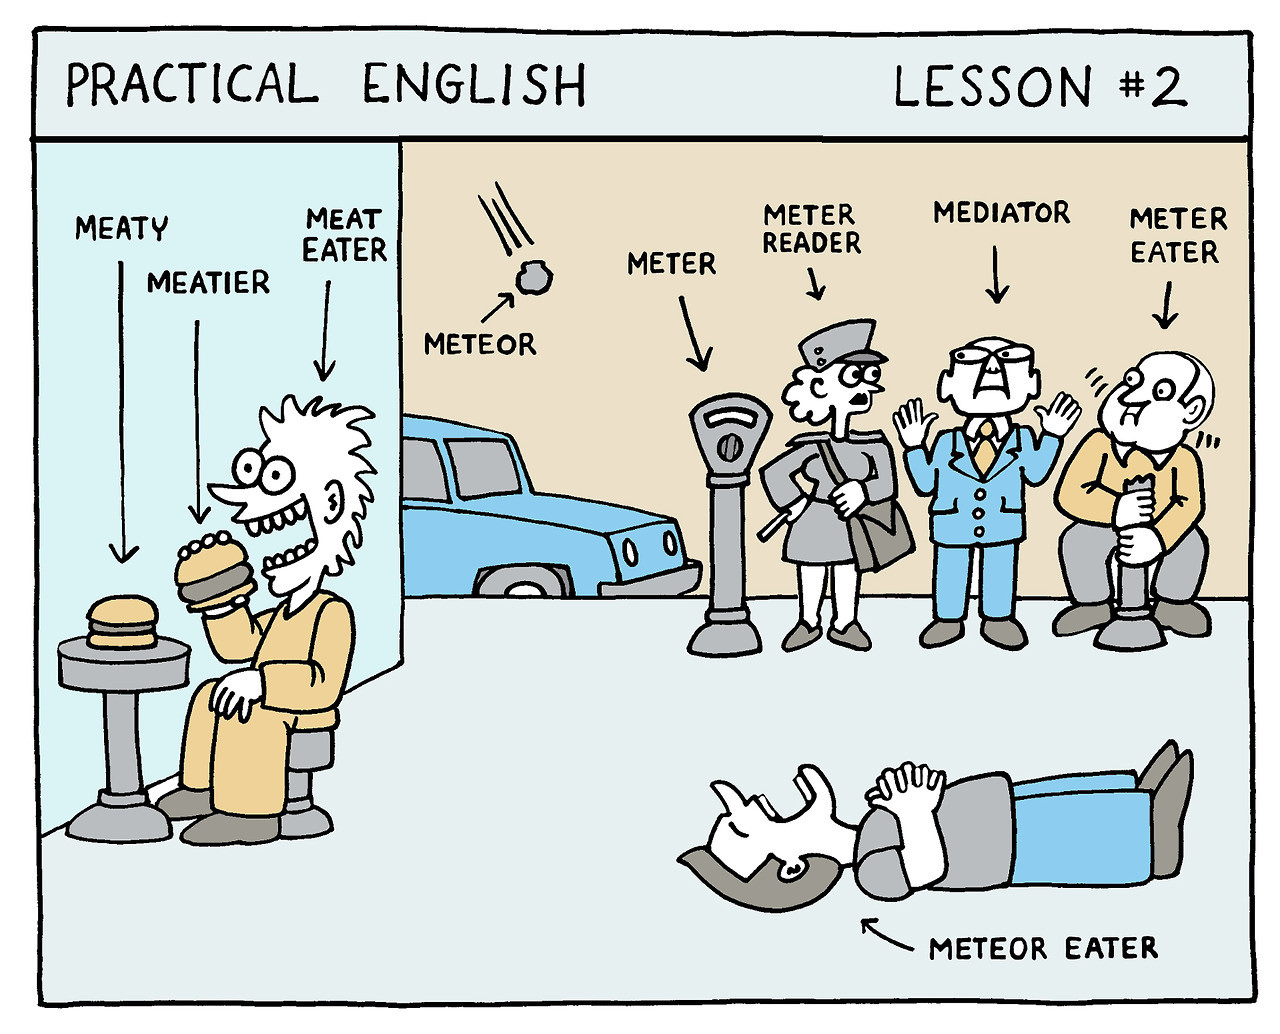 Practical English – Lesson #2